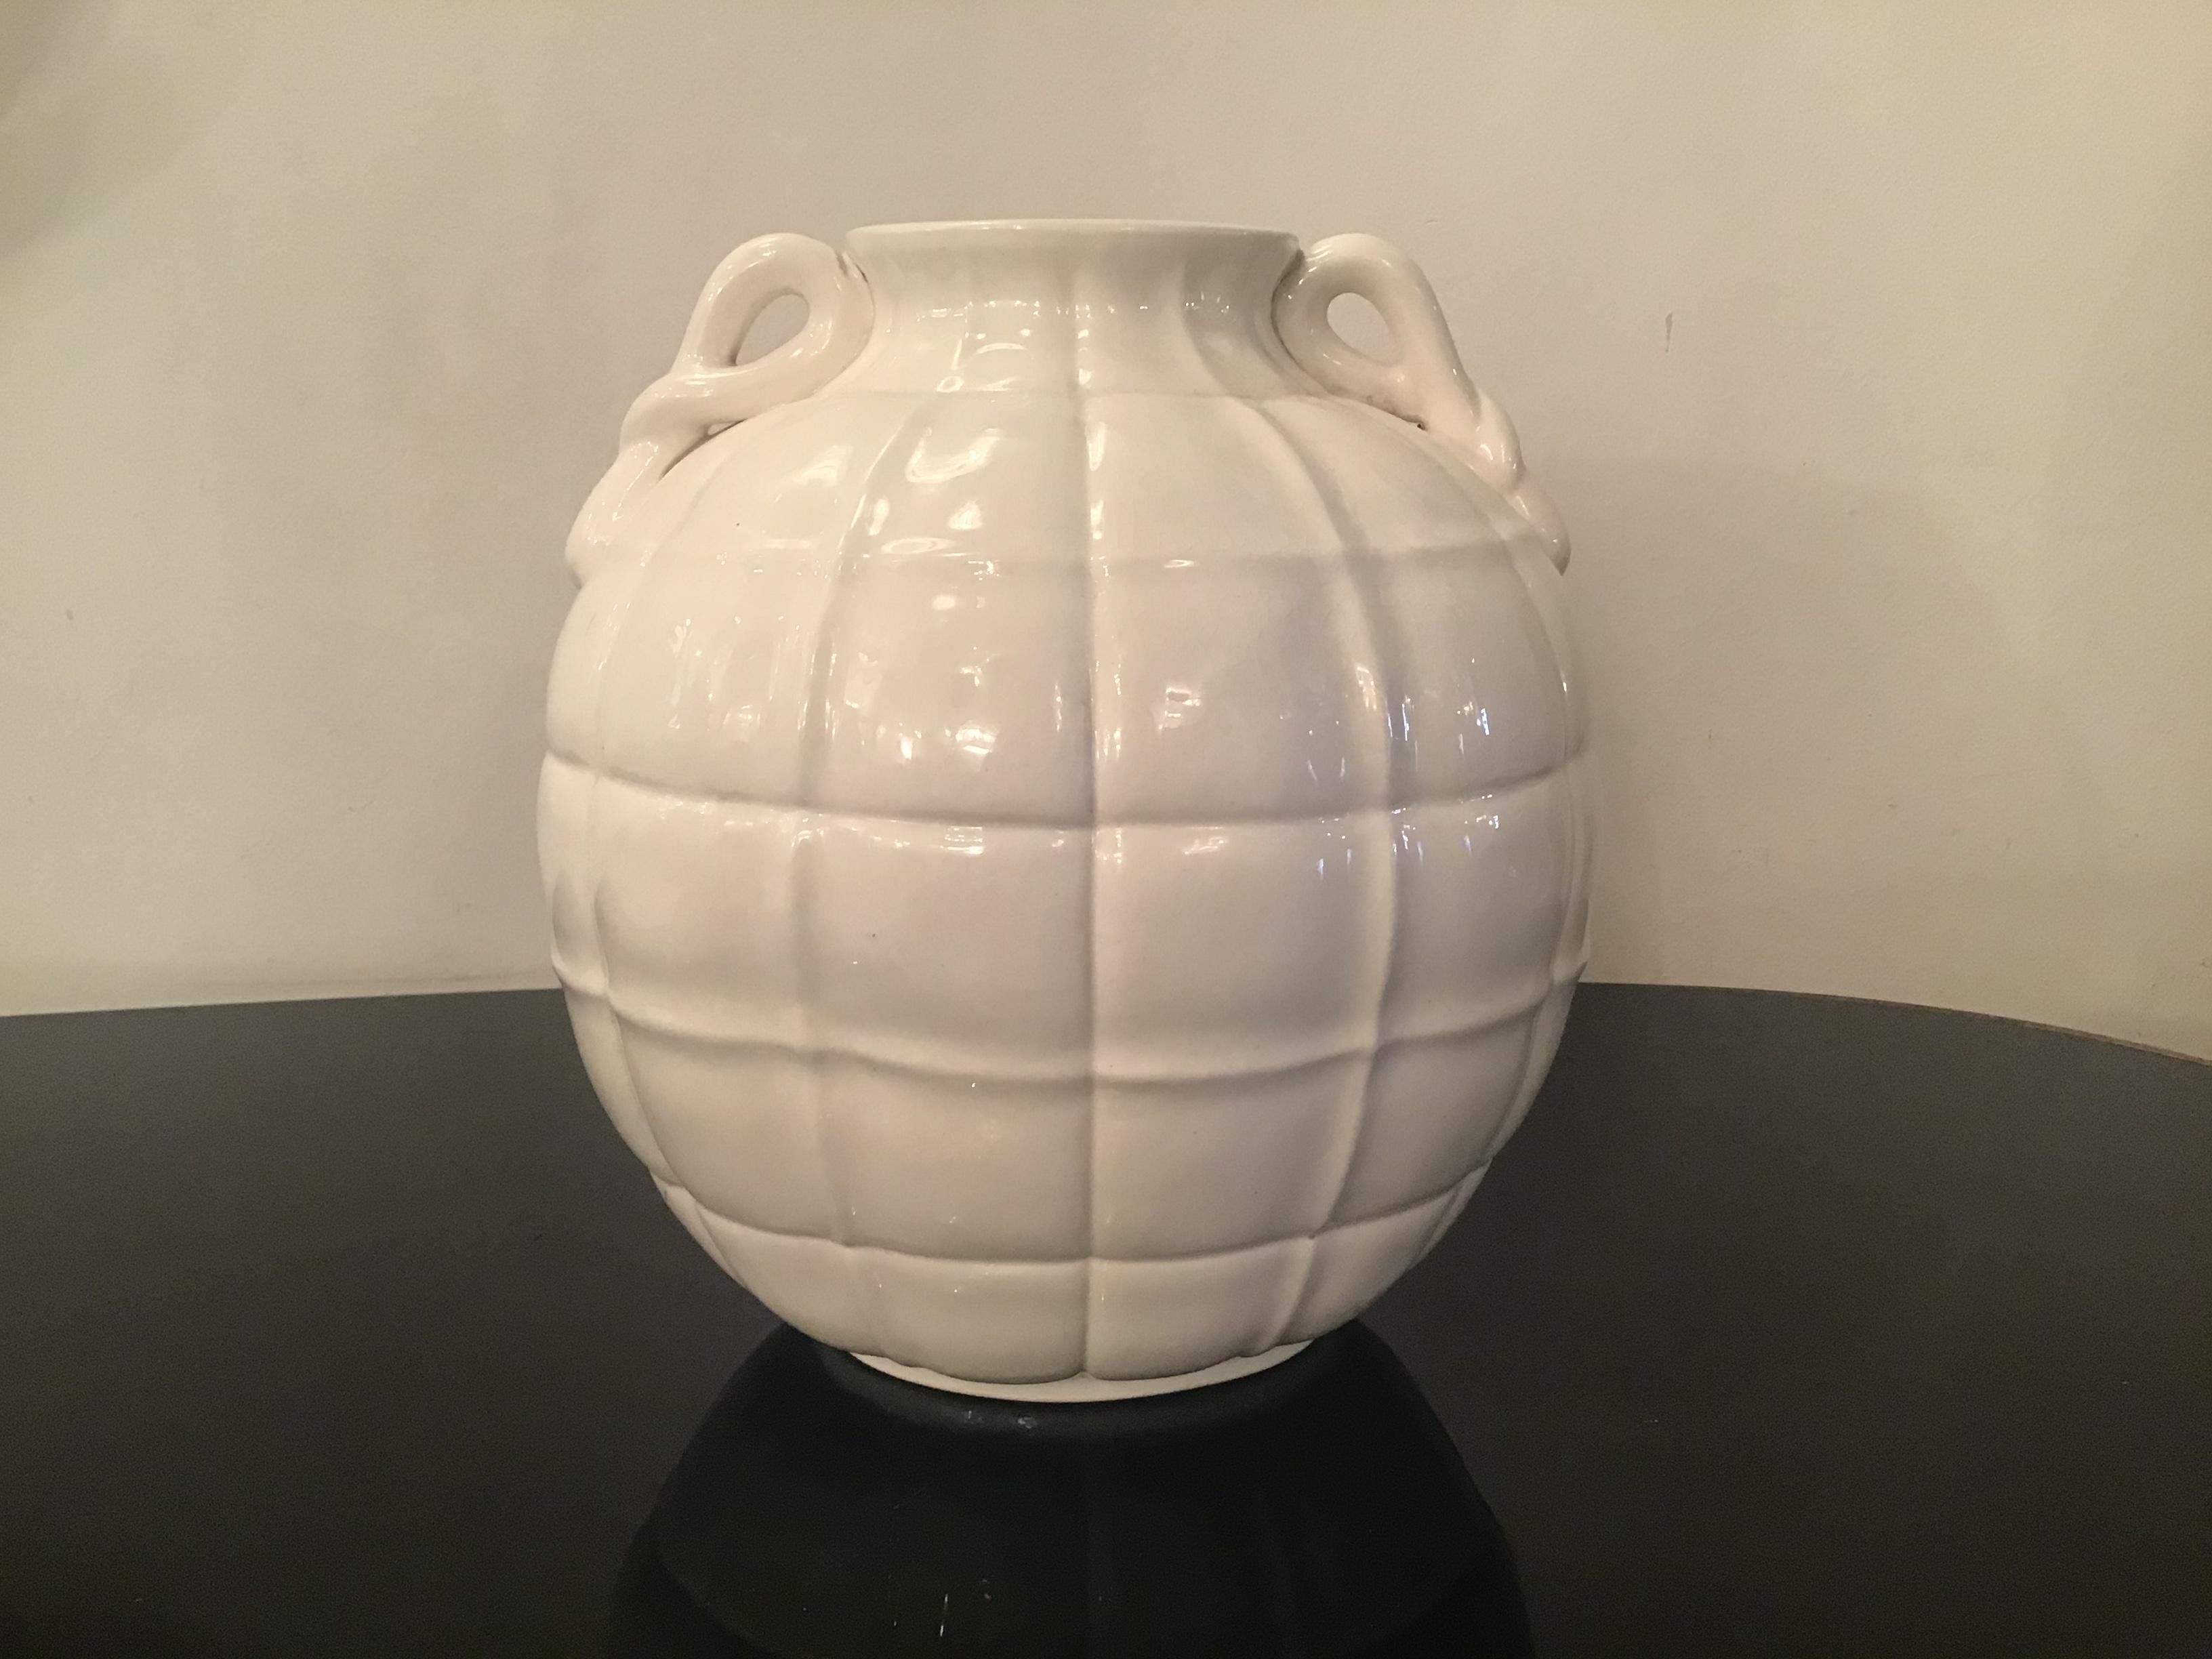 Gio’ Ponti  “ Richard Ginori” Vase Ceramic 1929 Italy  For Sale 1